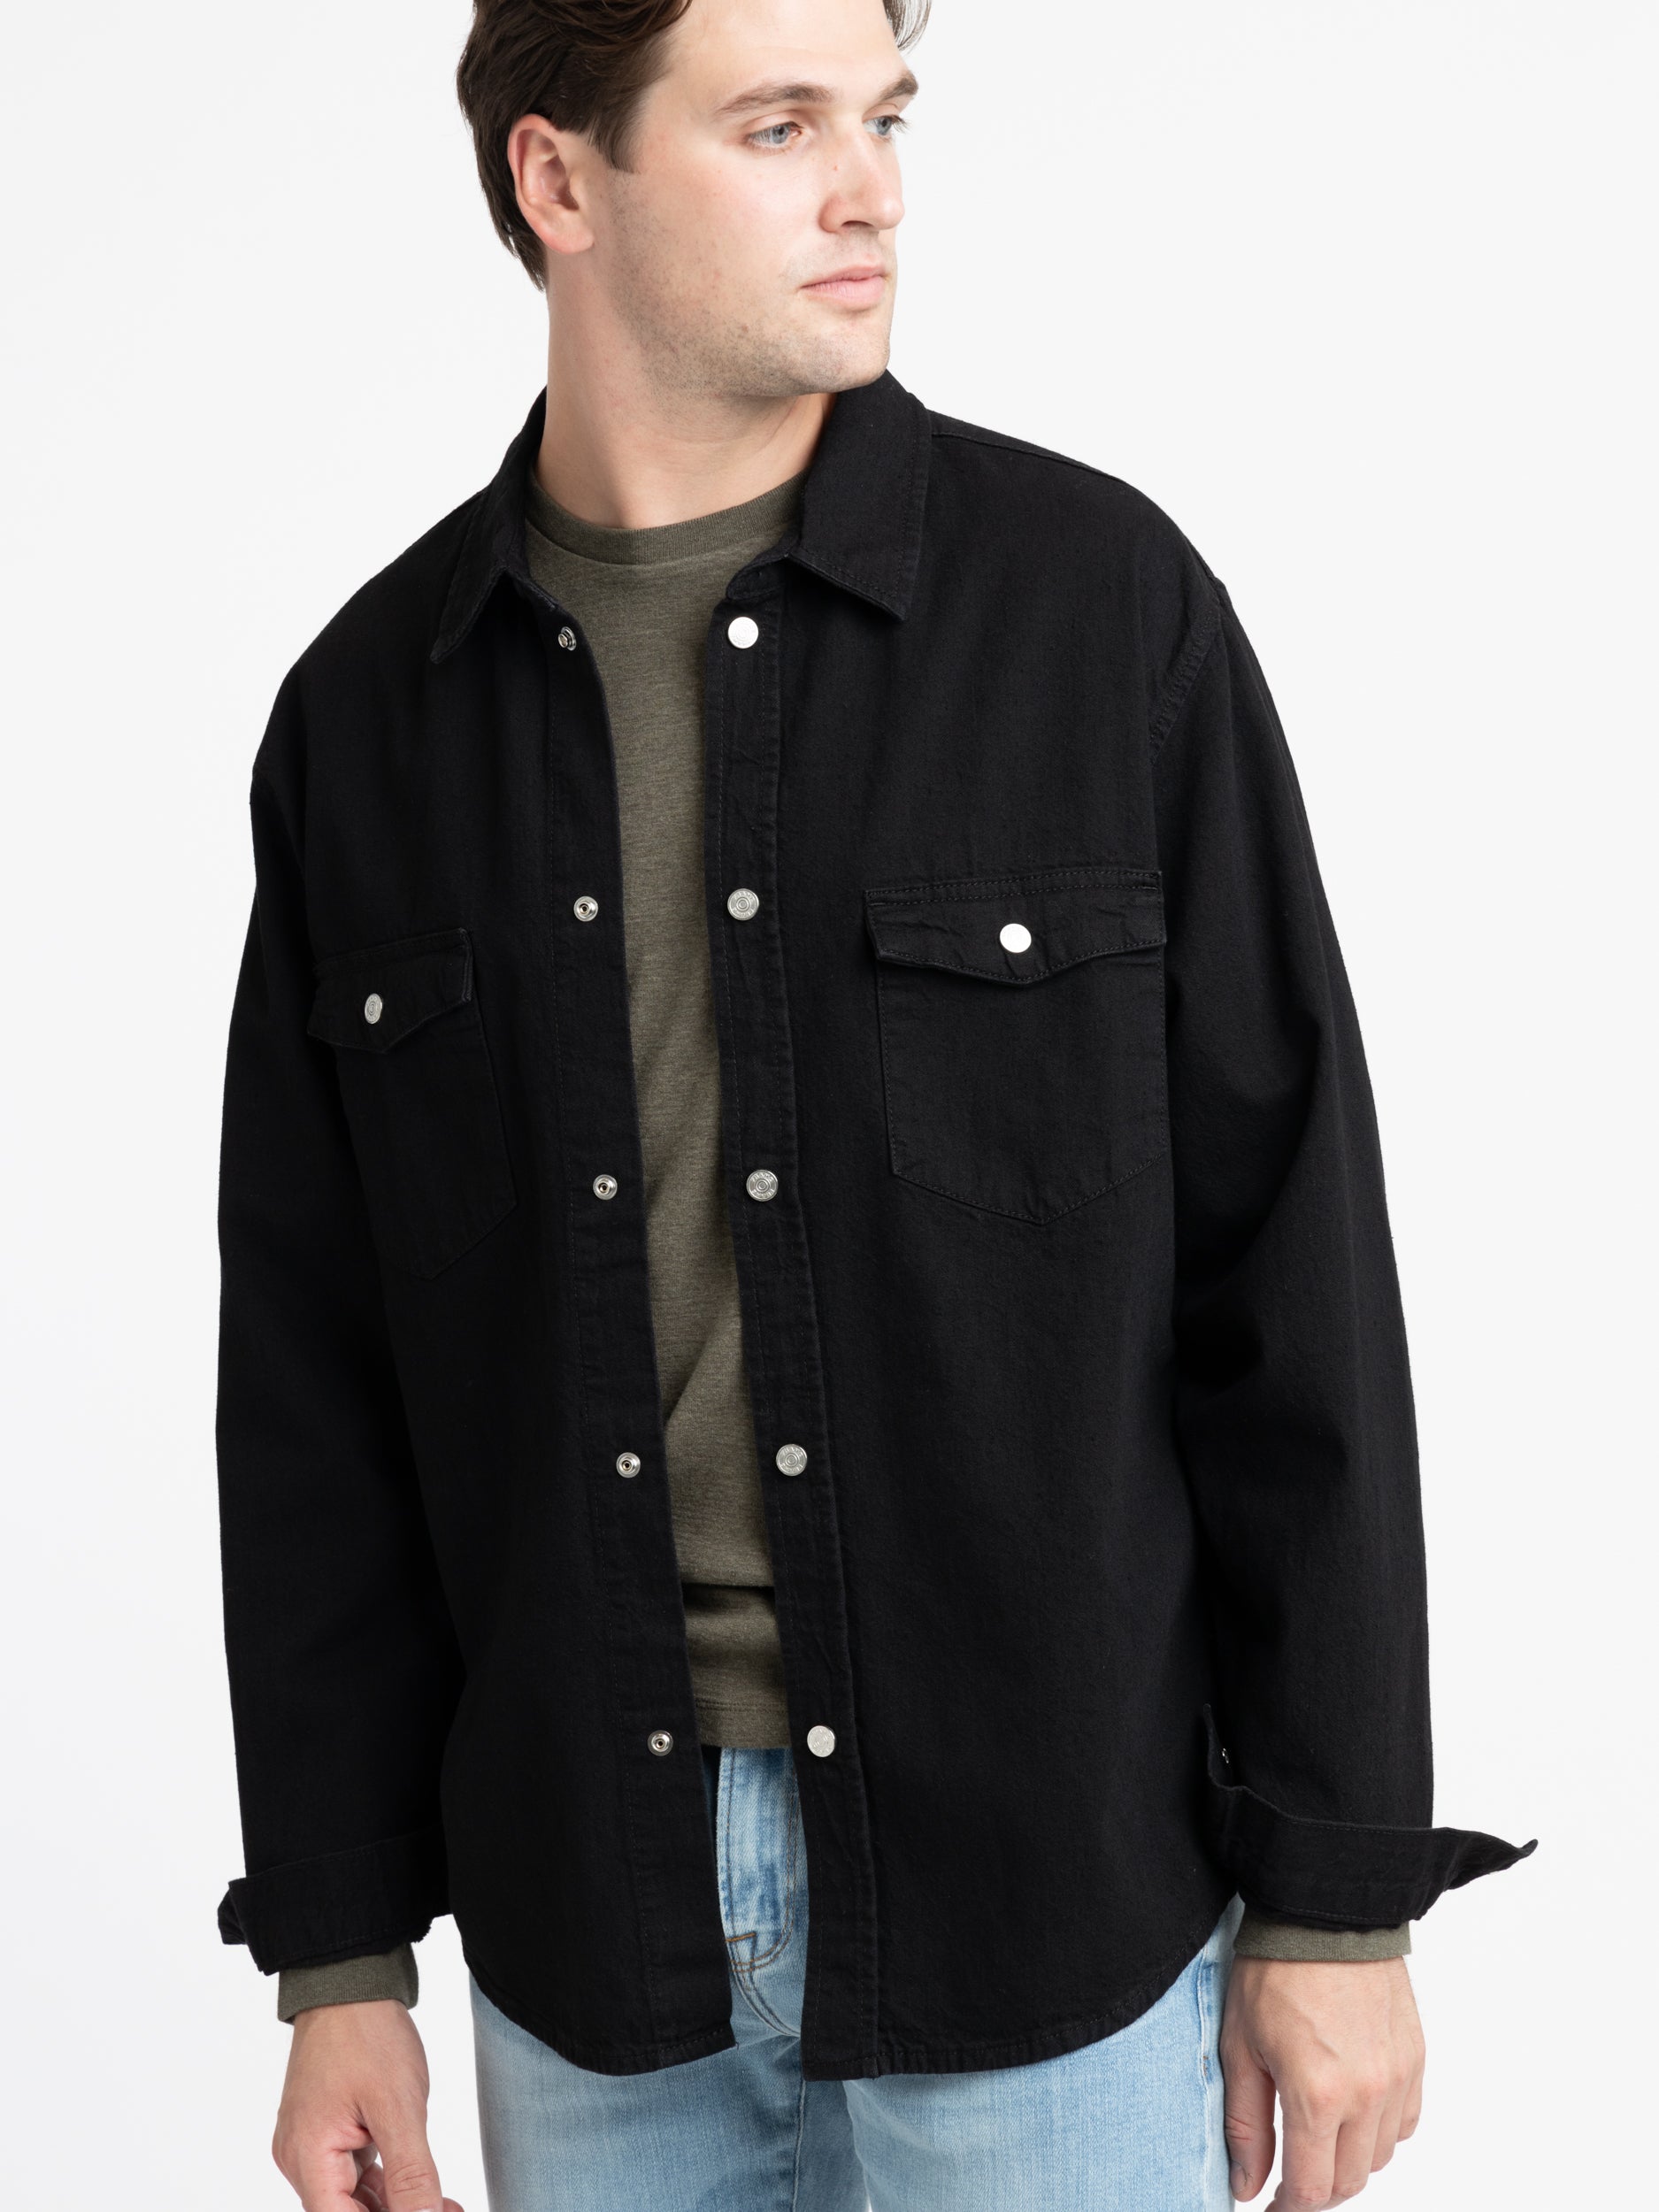 JCrew Lightweight Denim Zip Front Overshirt - Indigo - Mens XL | eBay